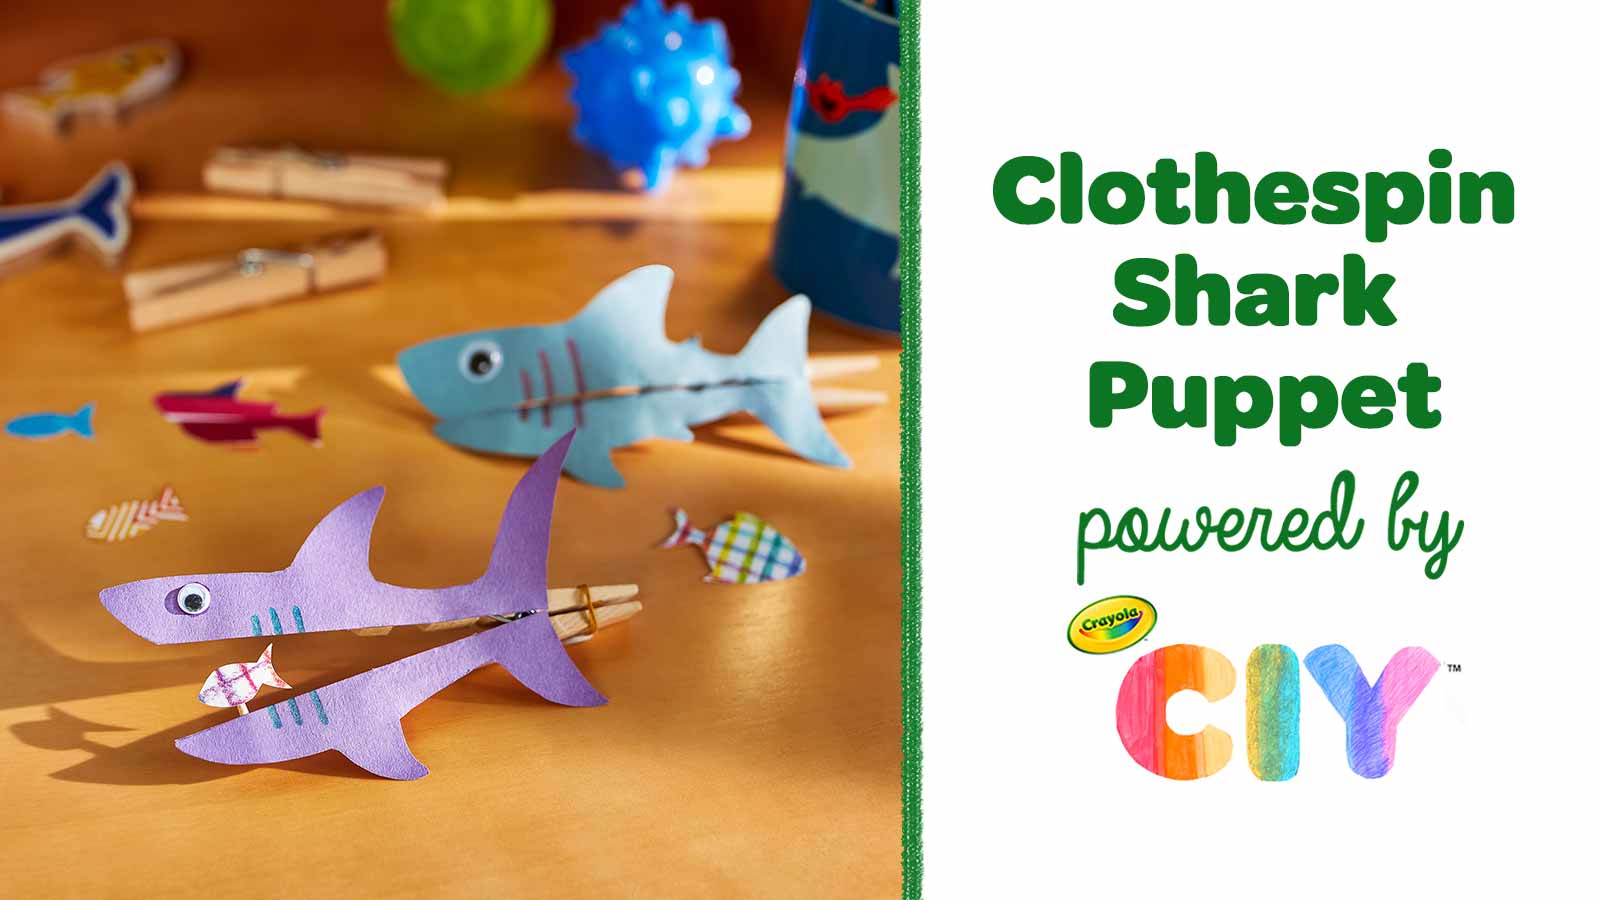 DIY Clothespin Shark Puppet | Craft  | Crayola CIY, DIY Crafts  for Kids and Adults 